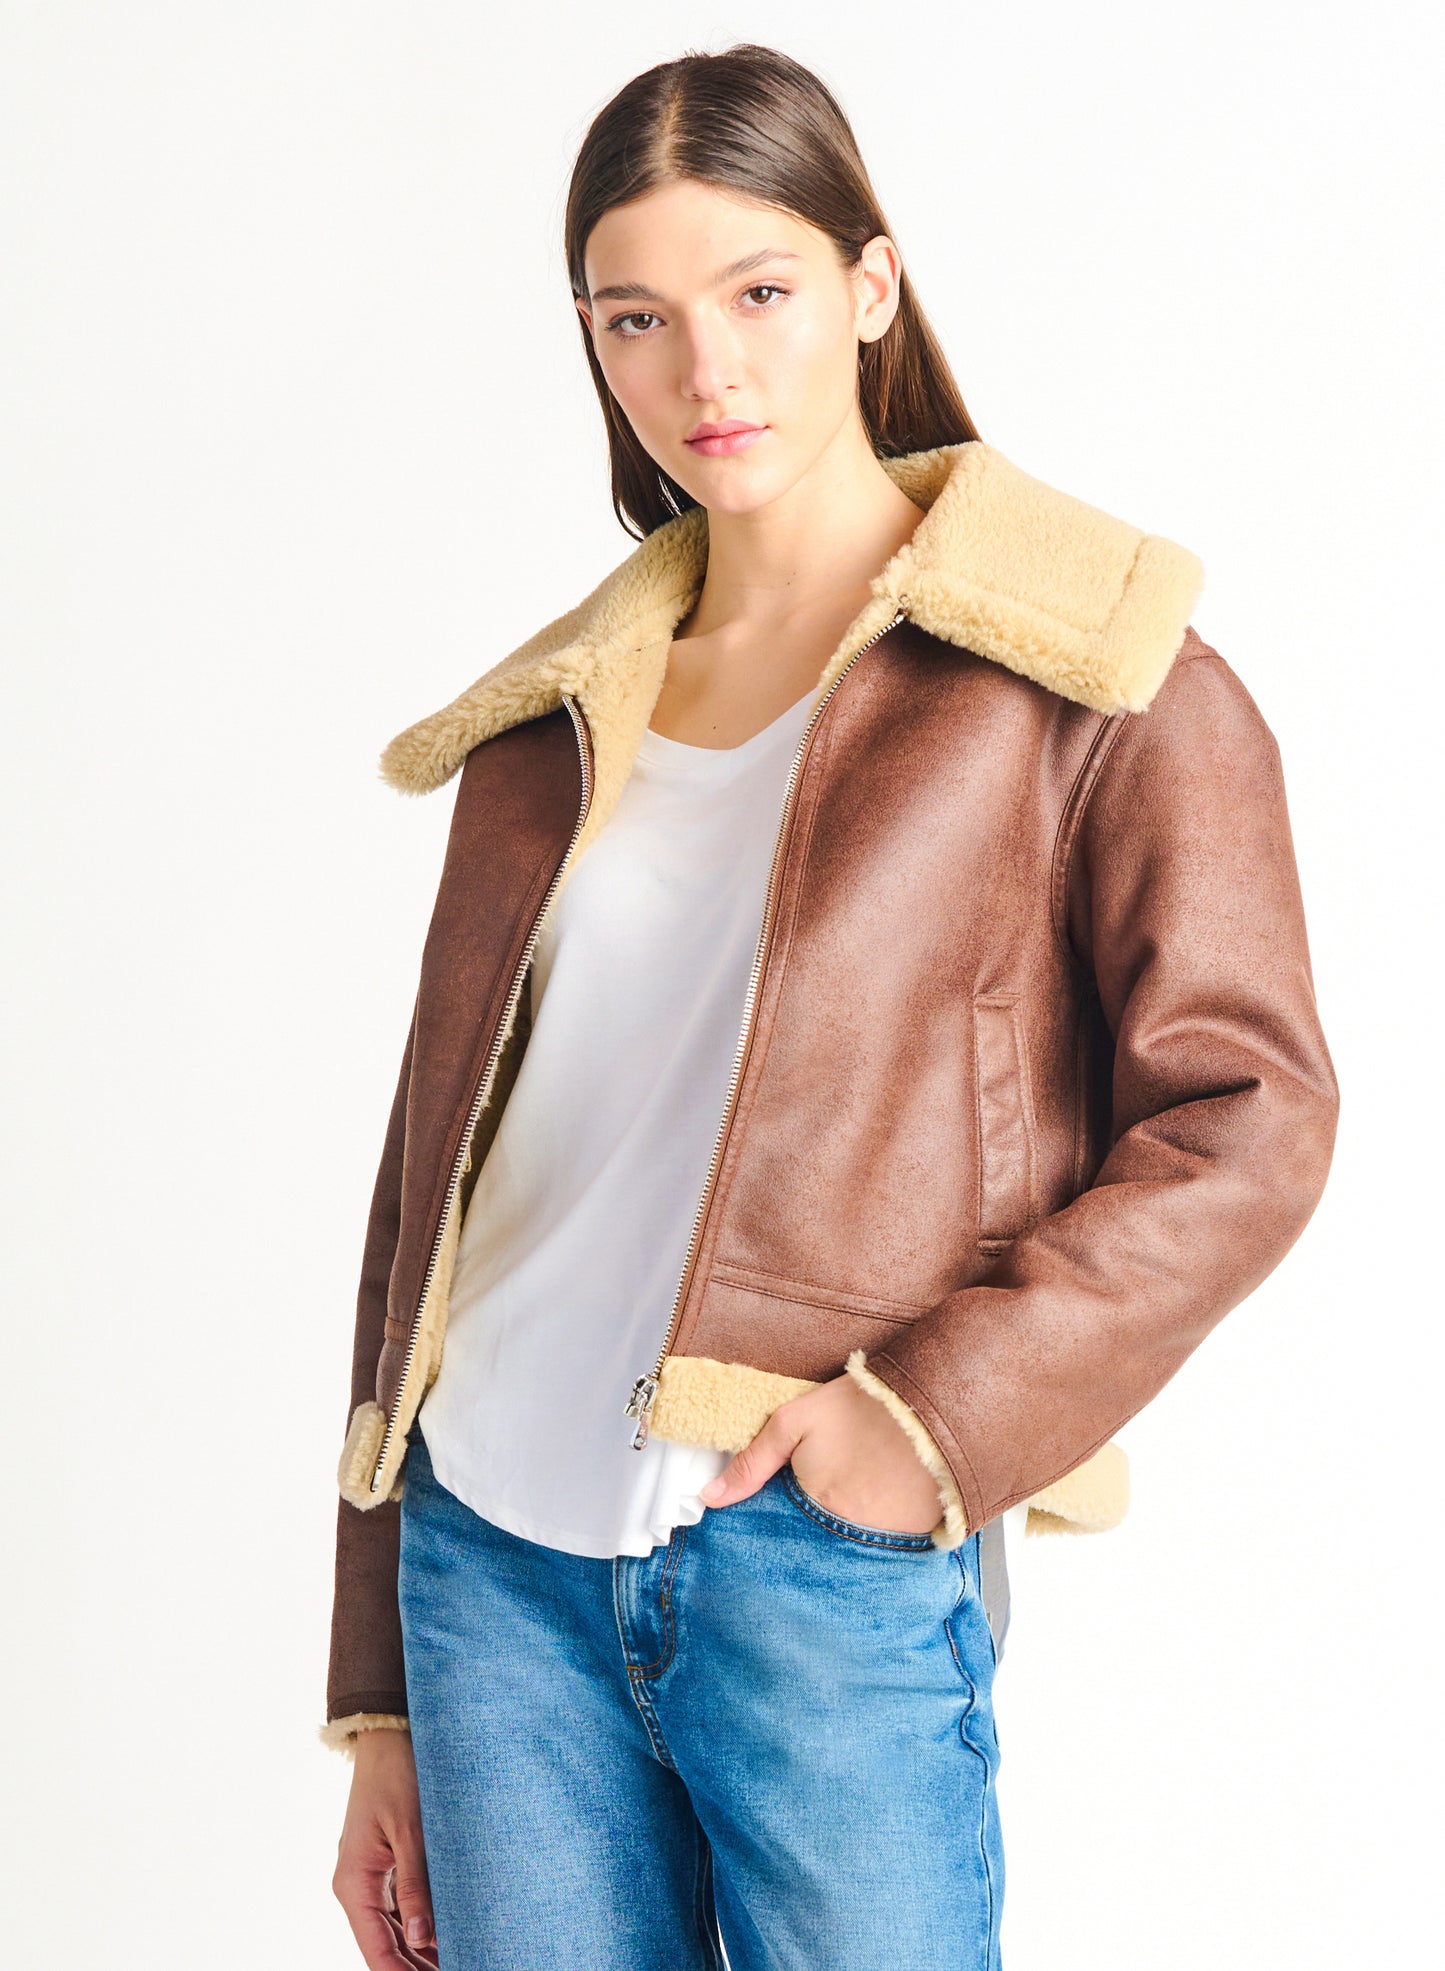 Faux-Leather Jacket